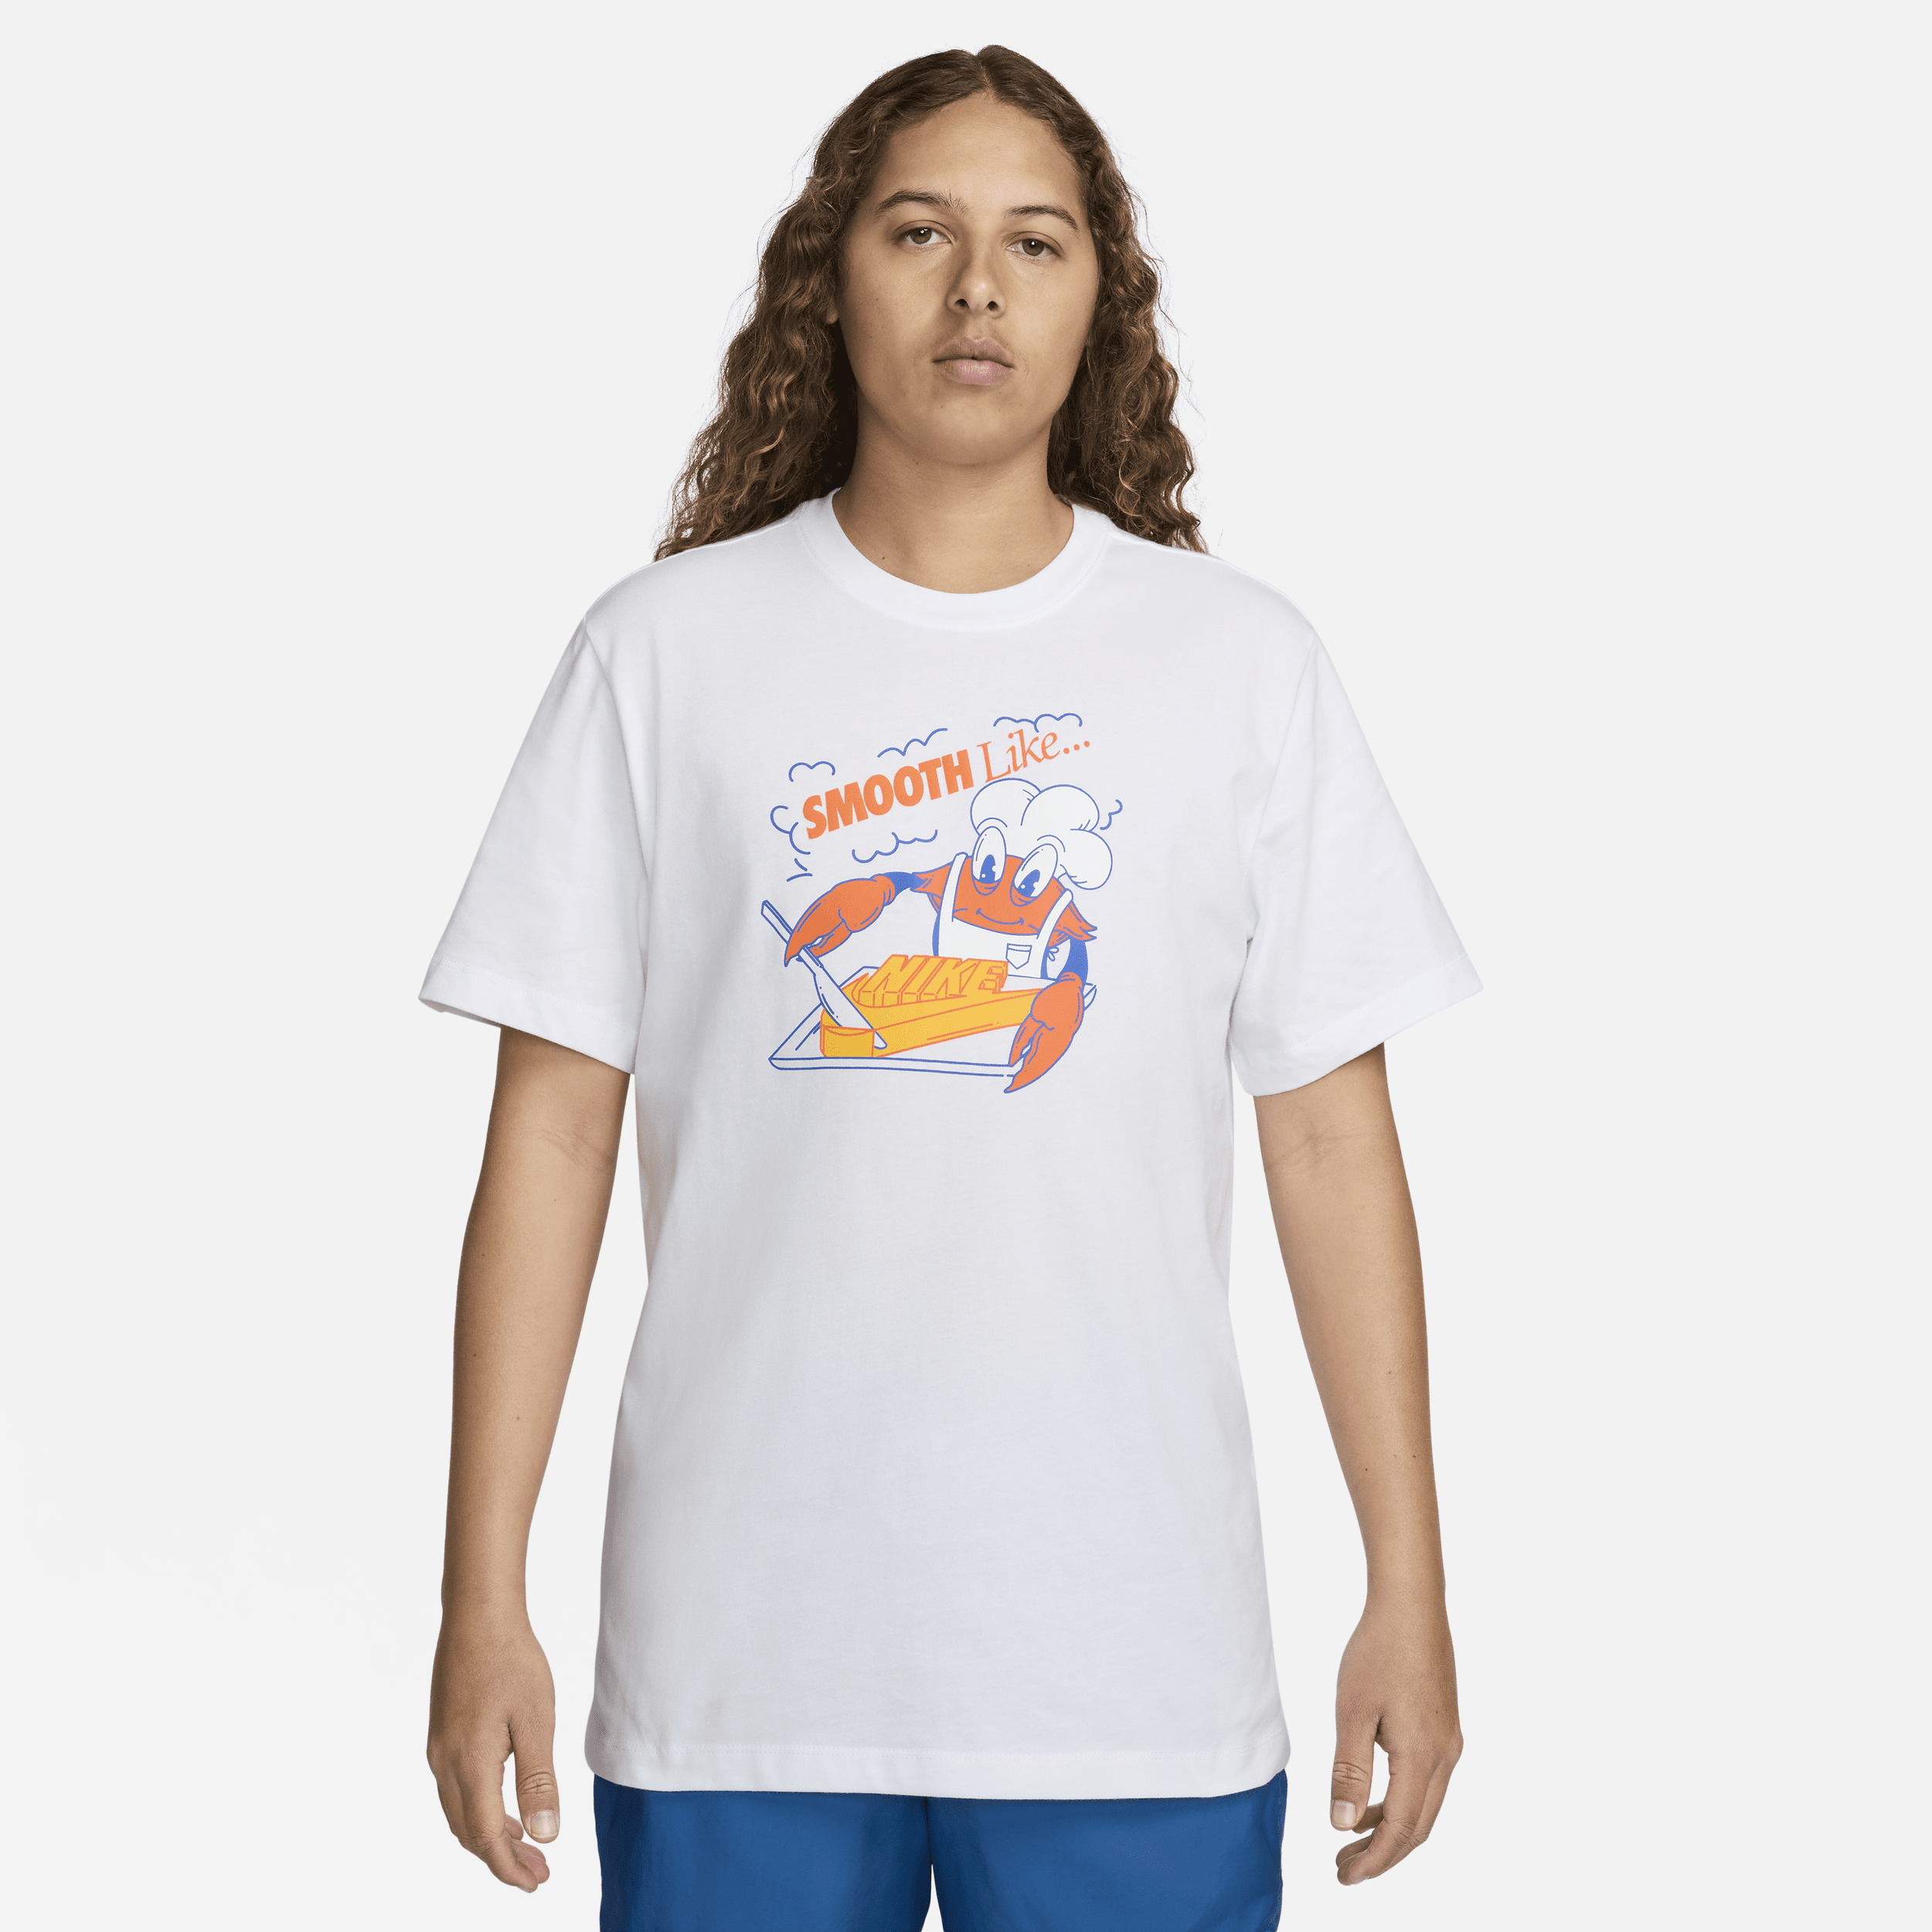 Nike Sportswear Camiseta - Hombre - Blanco